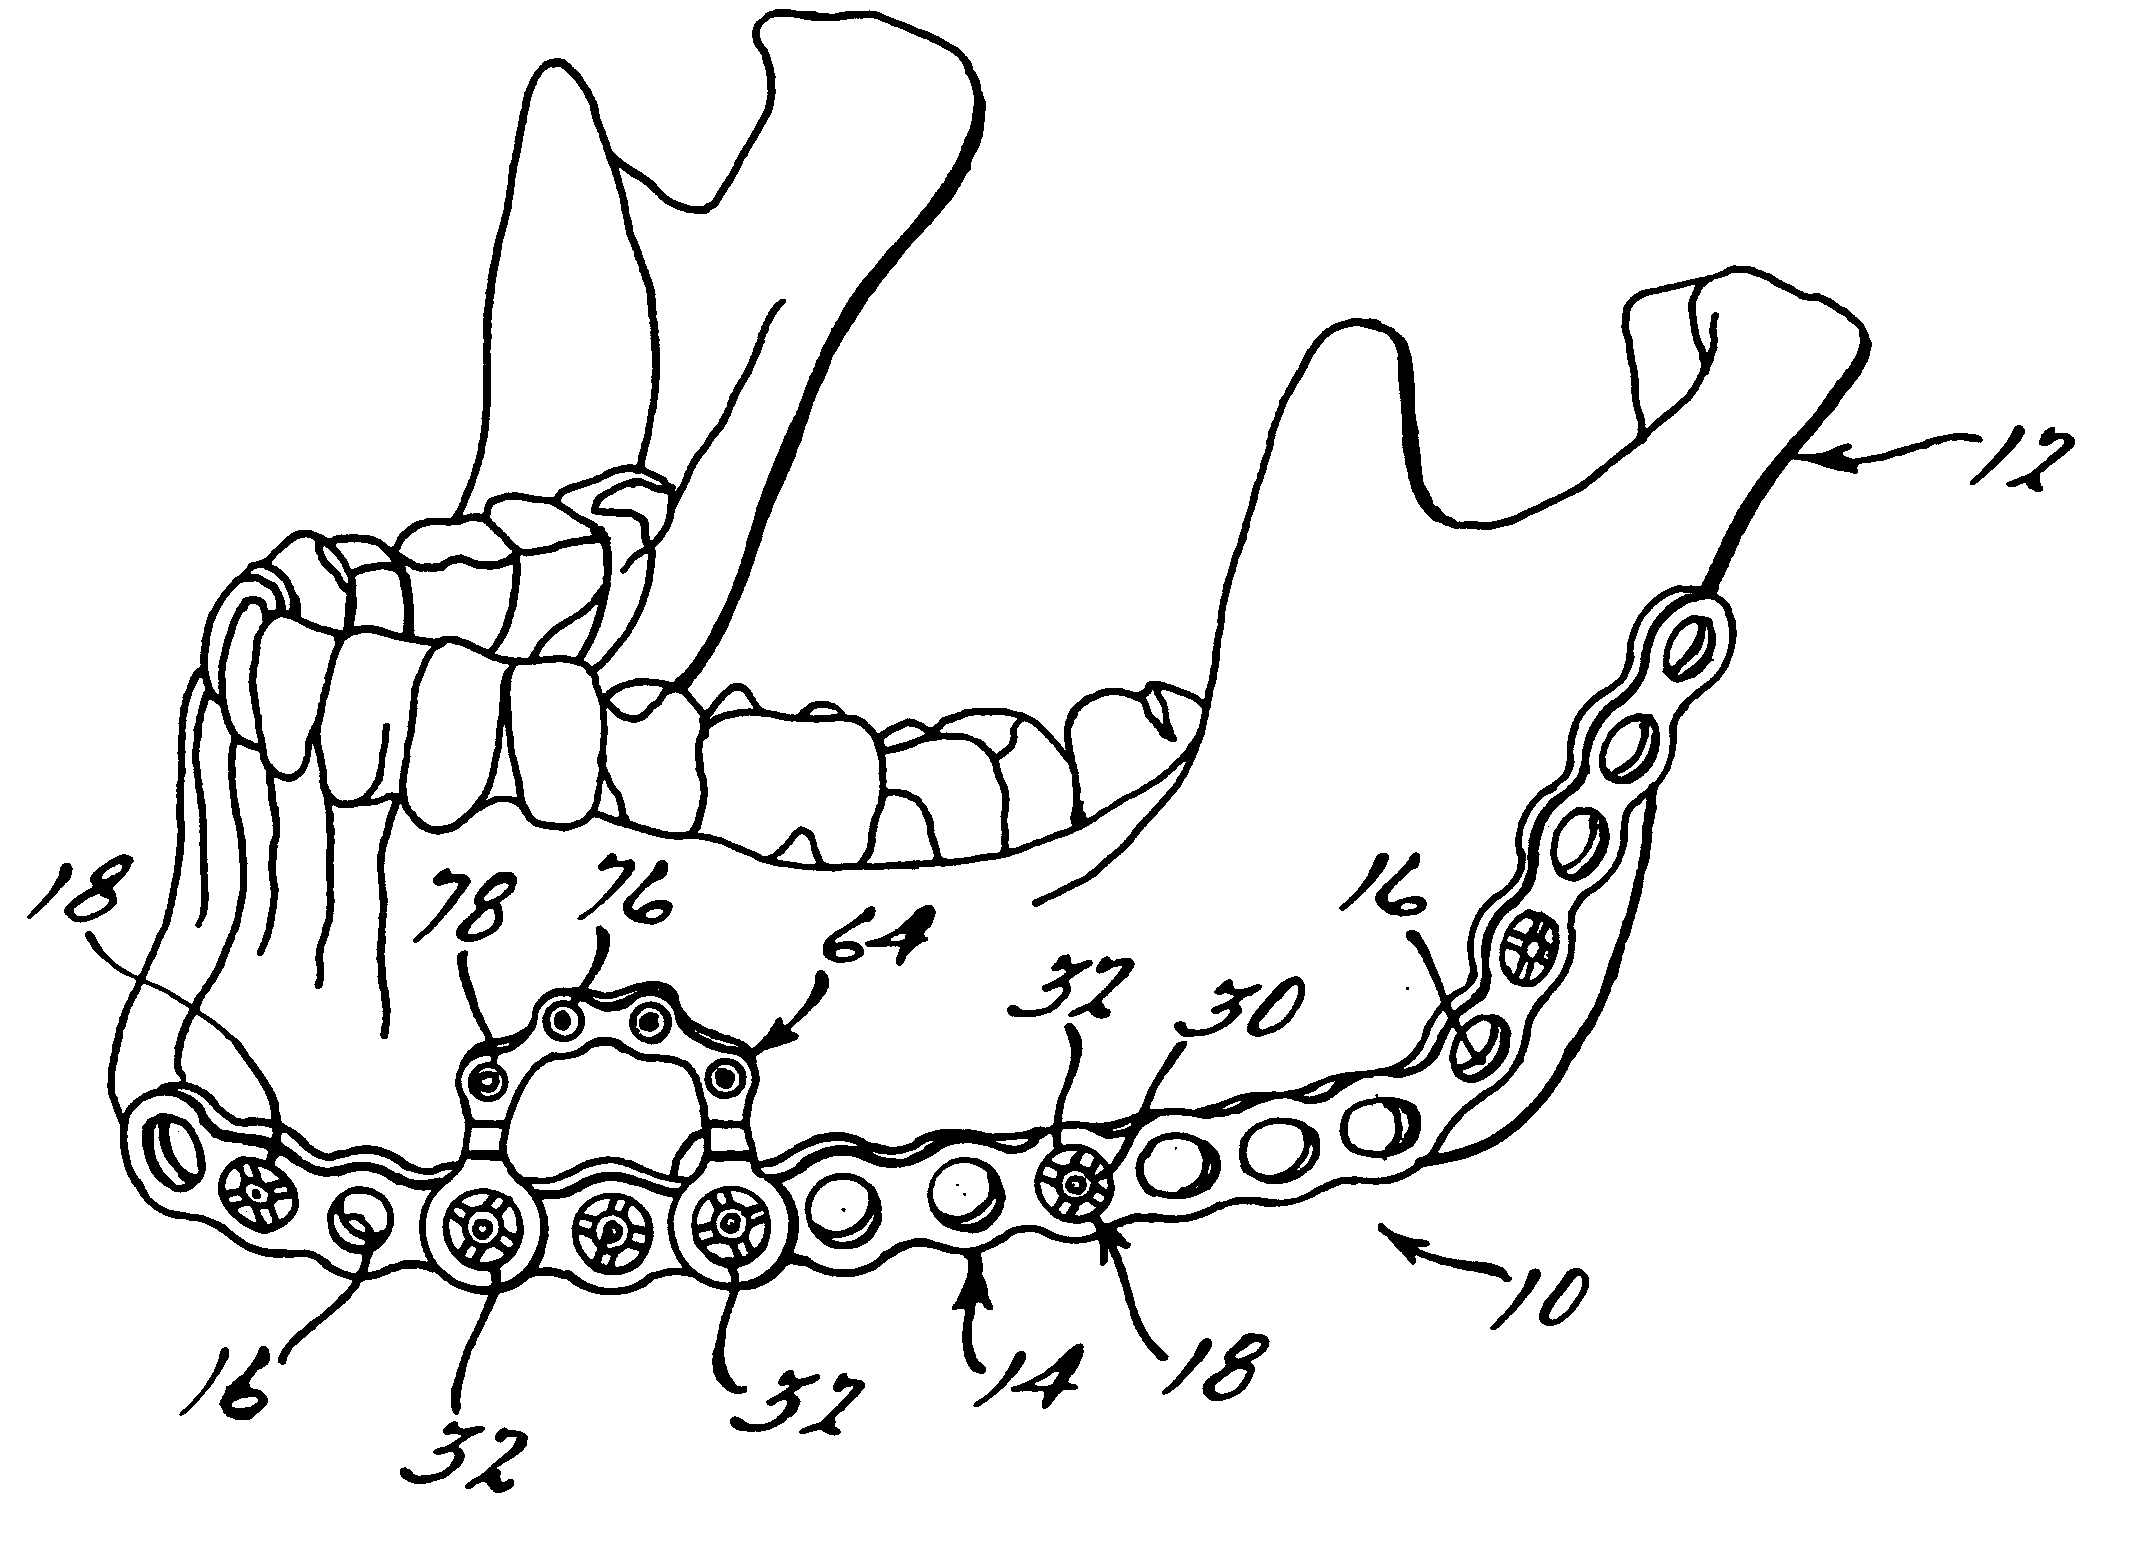 Method and apparatus for mandibular osteosynthesis